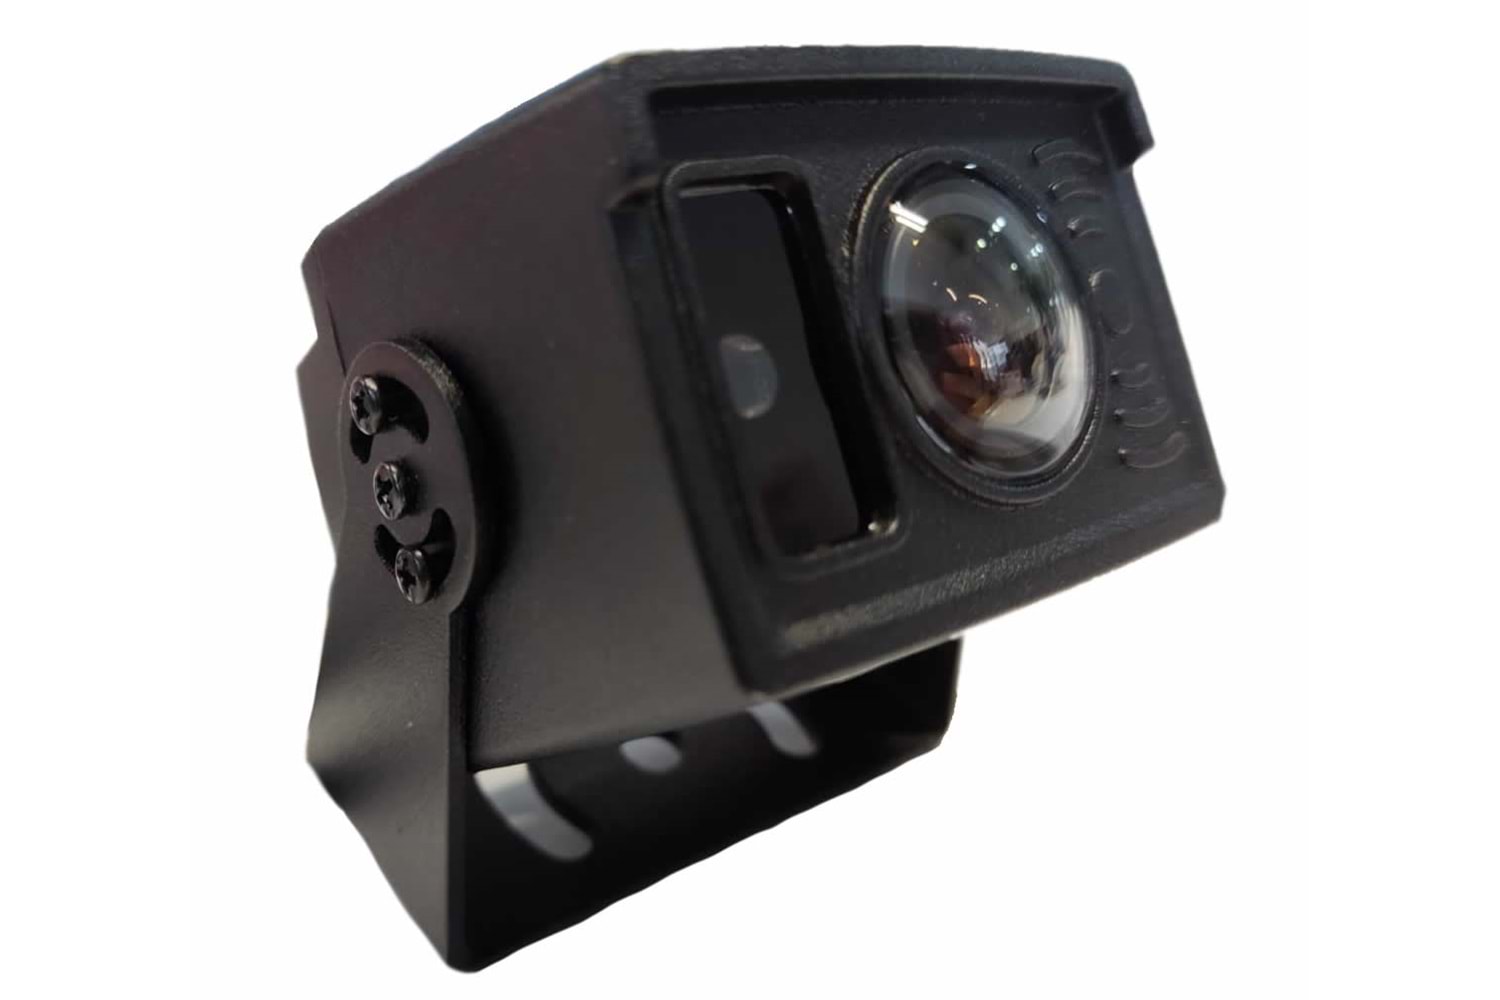 İNOX-5028 AHD CCTV CAMERA